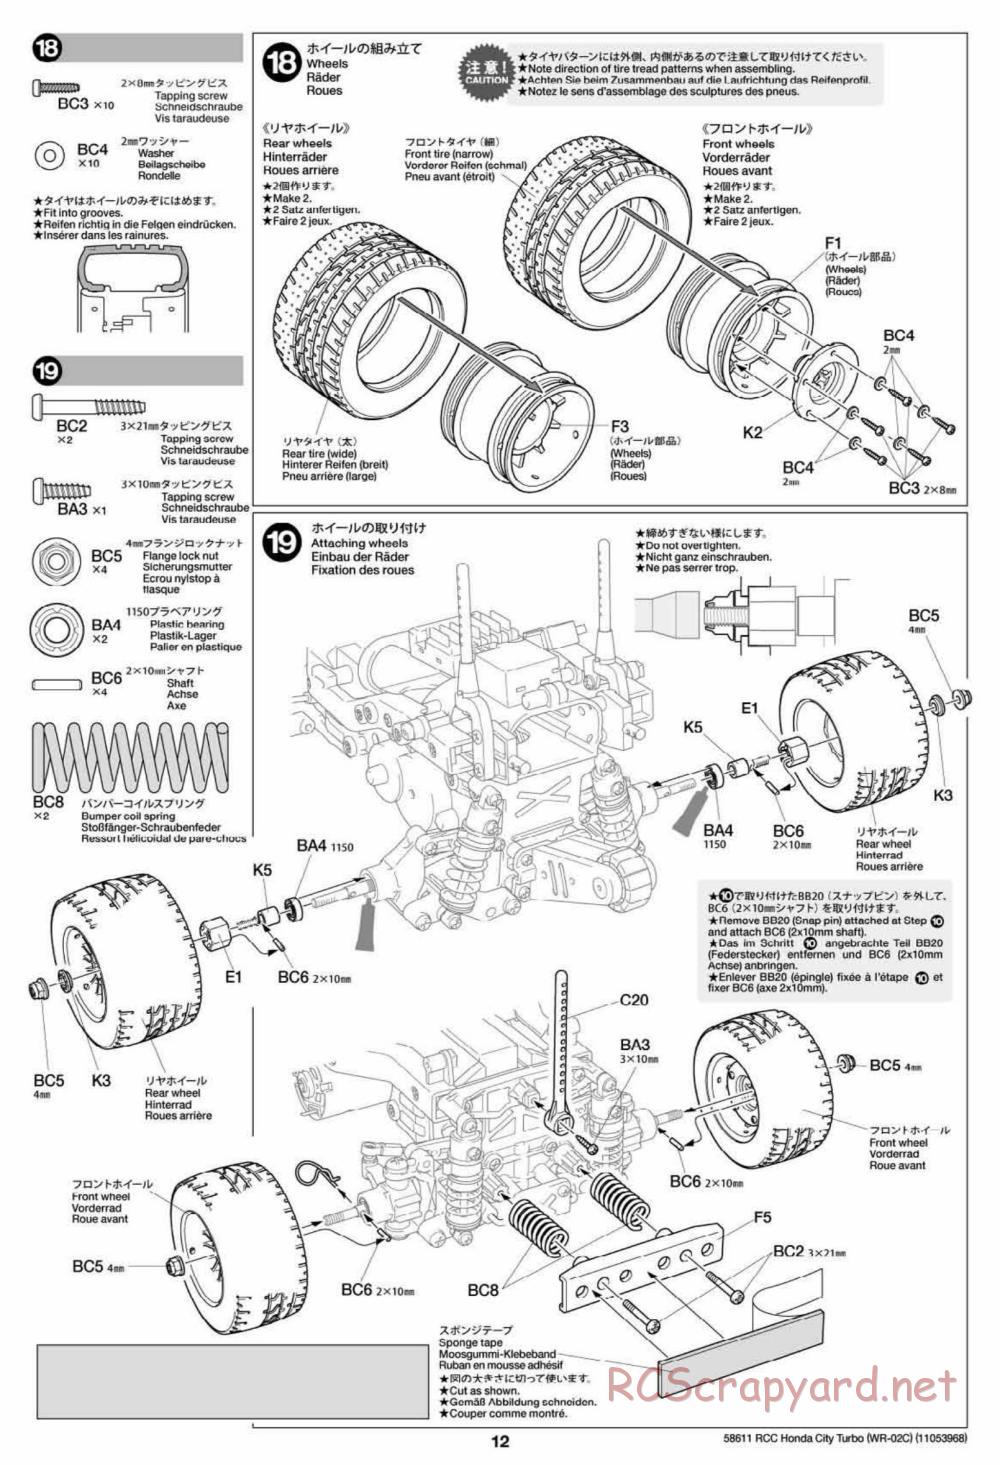 Tamiya - WR-02C Chassis - Manual - Page 12